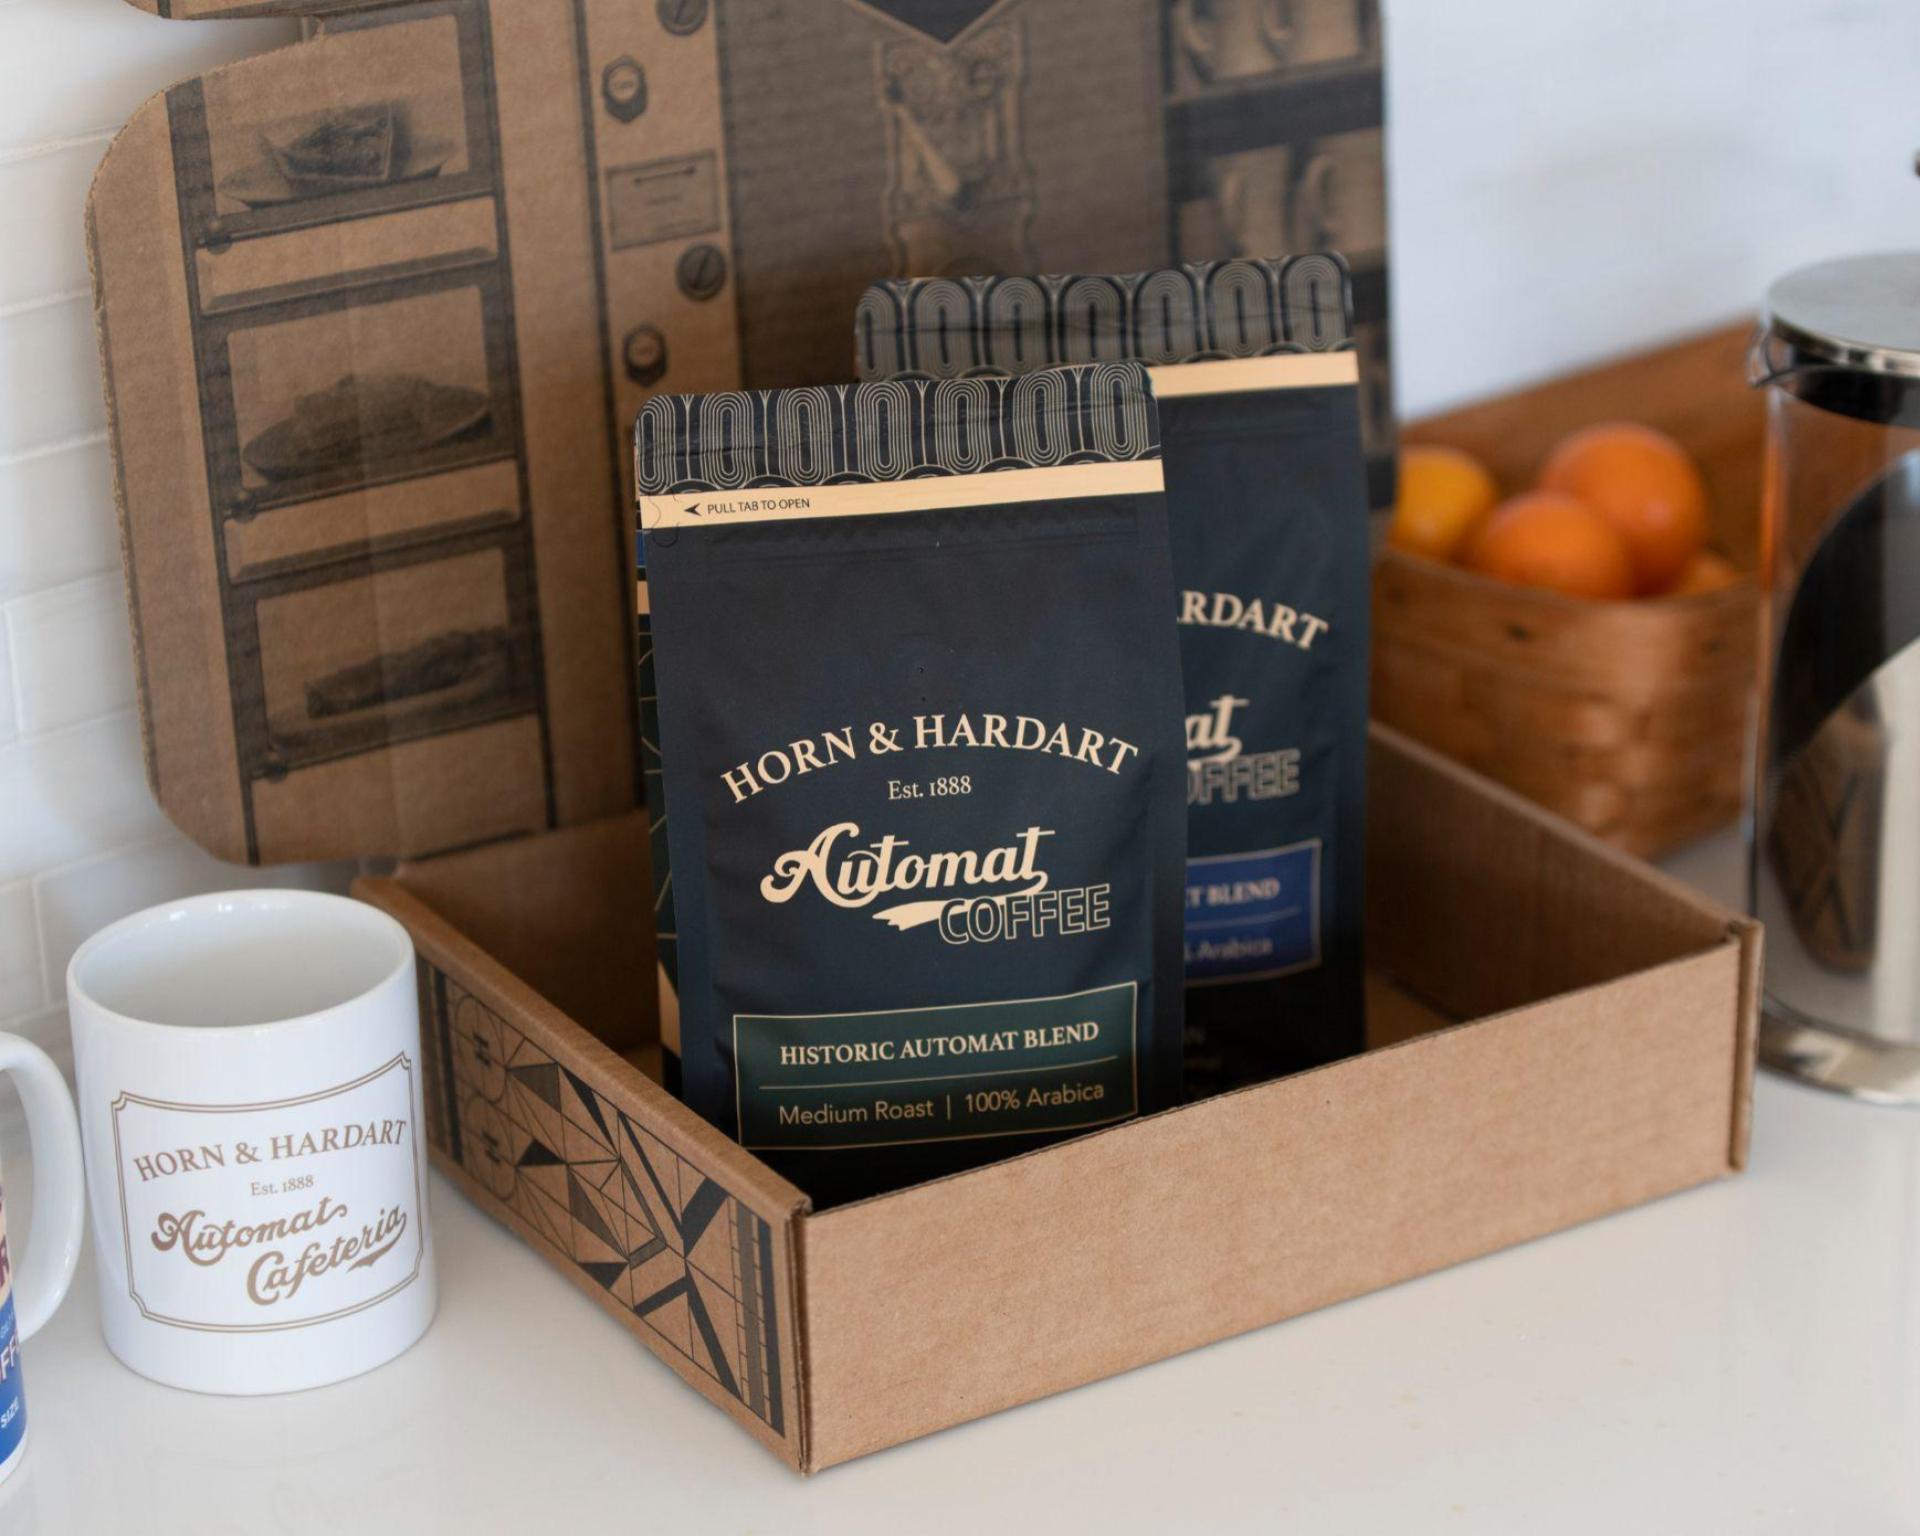 Horn & Hardart Coffee Bags in Box